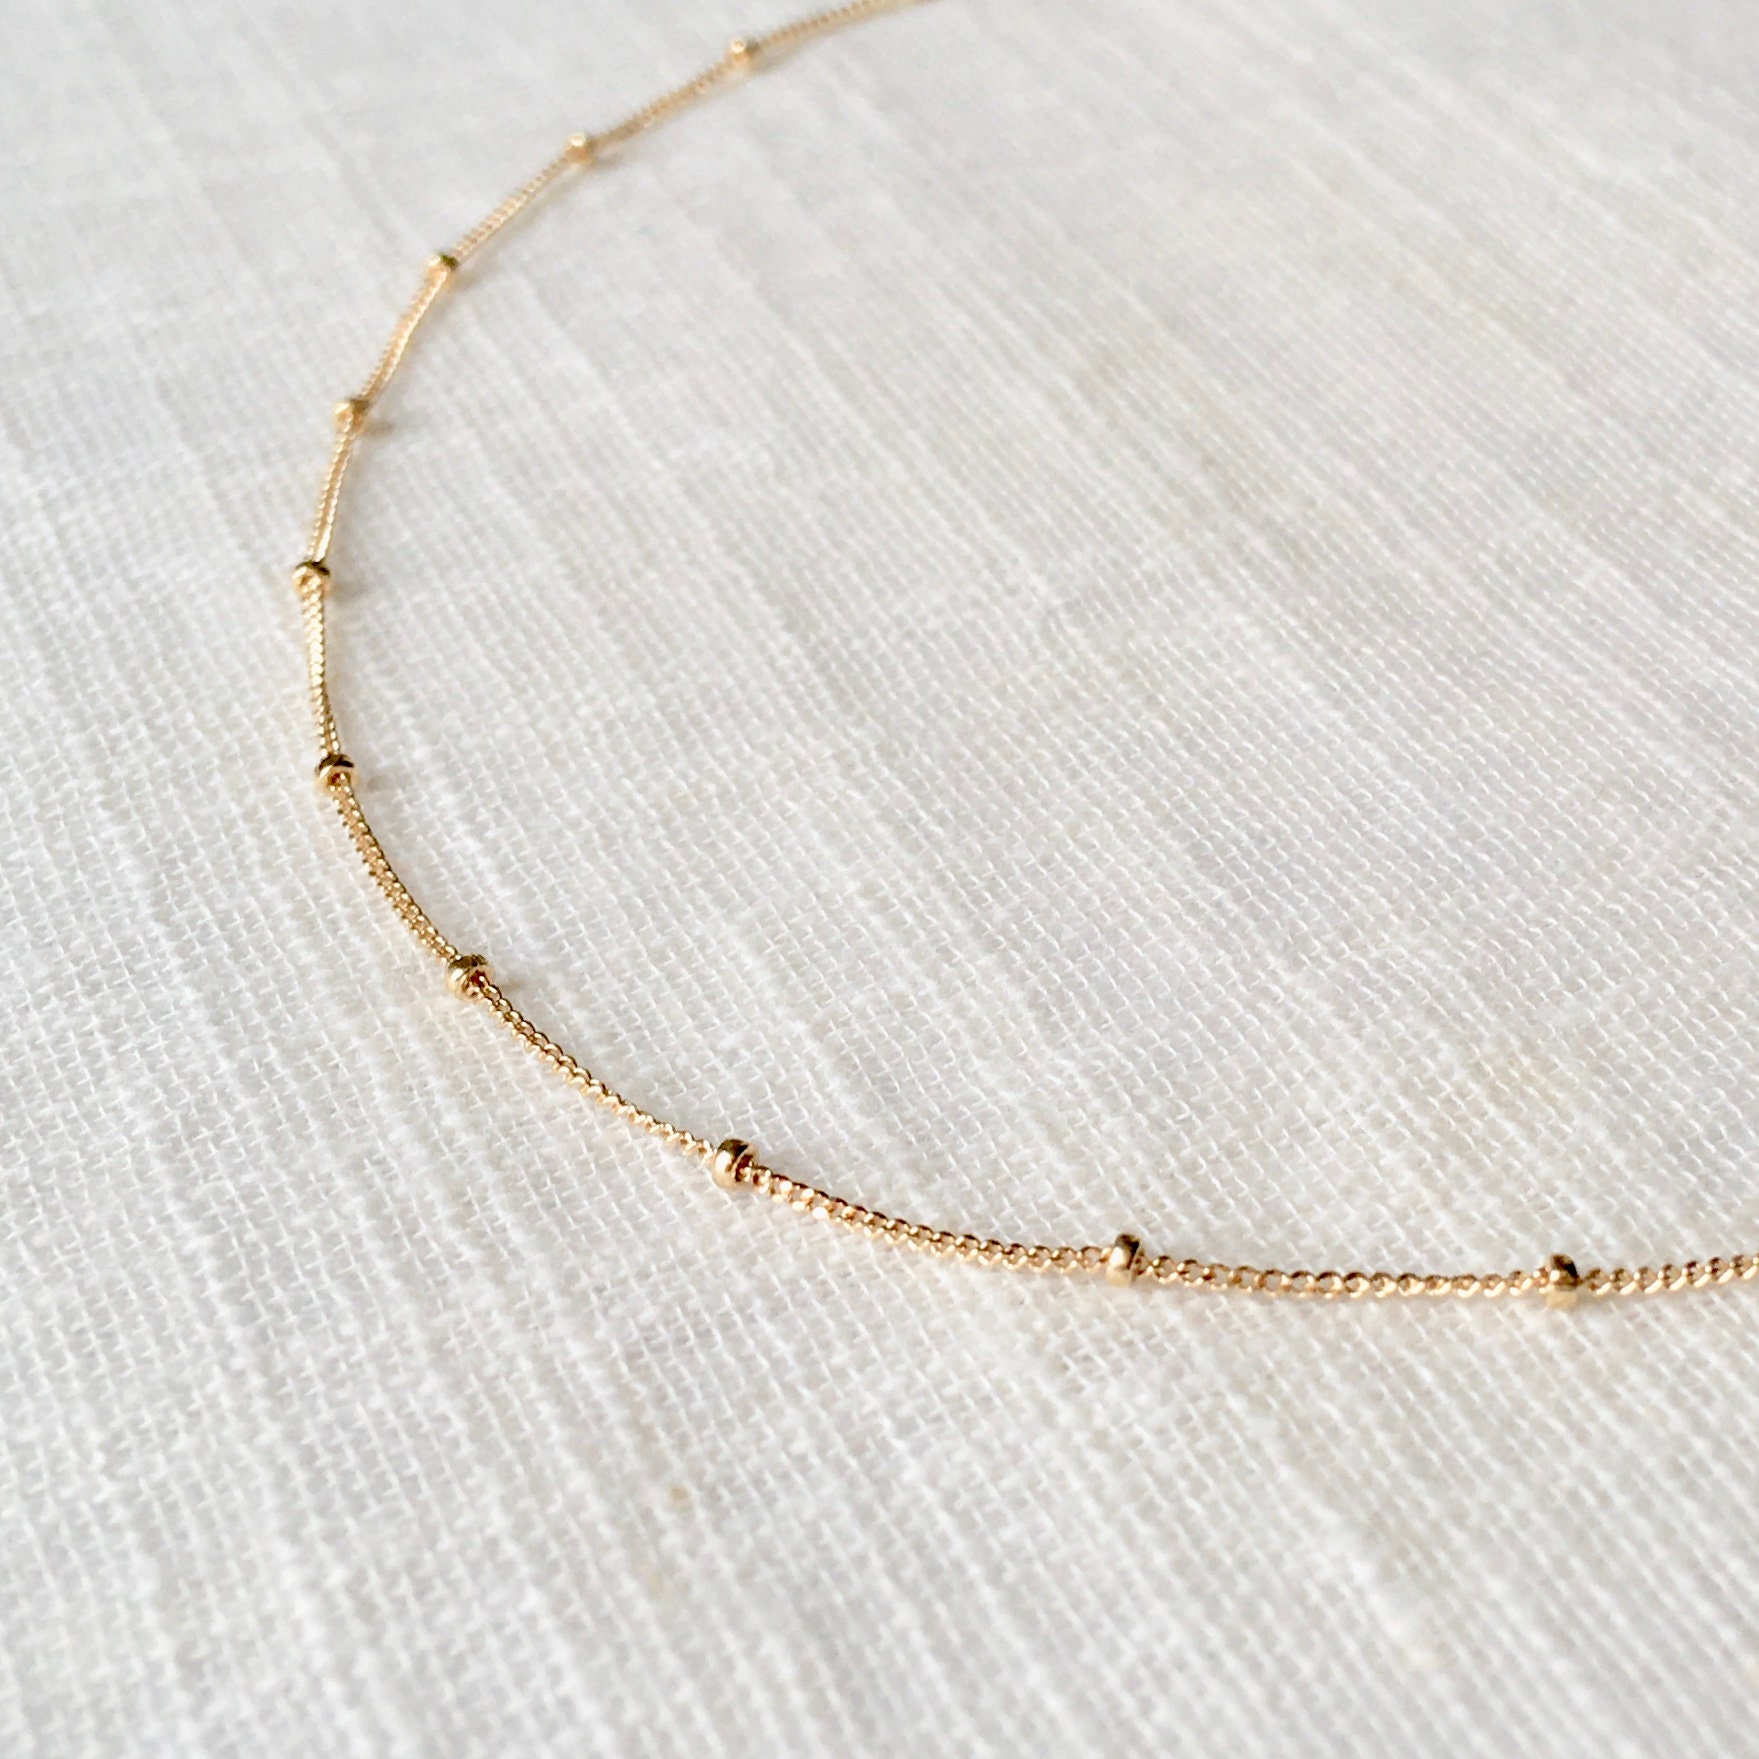 Gold Beaded Bracelet w Clear Floral Beads 14/20K GF Diamond Shape Chains  6.25